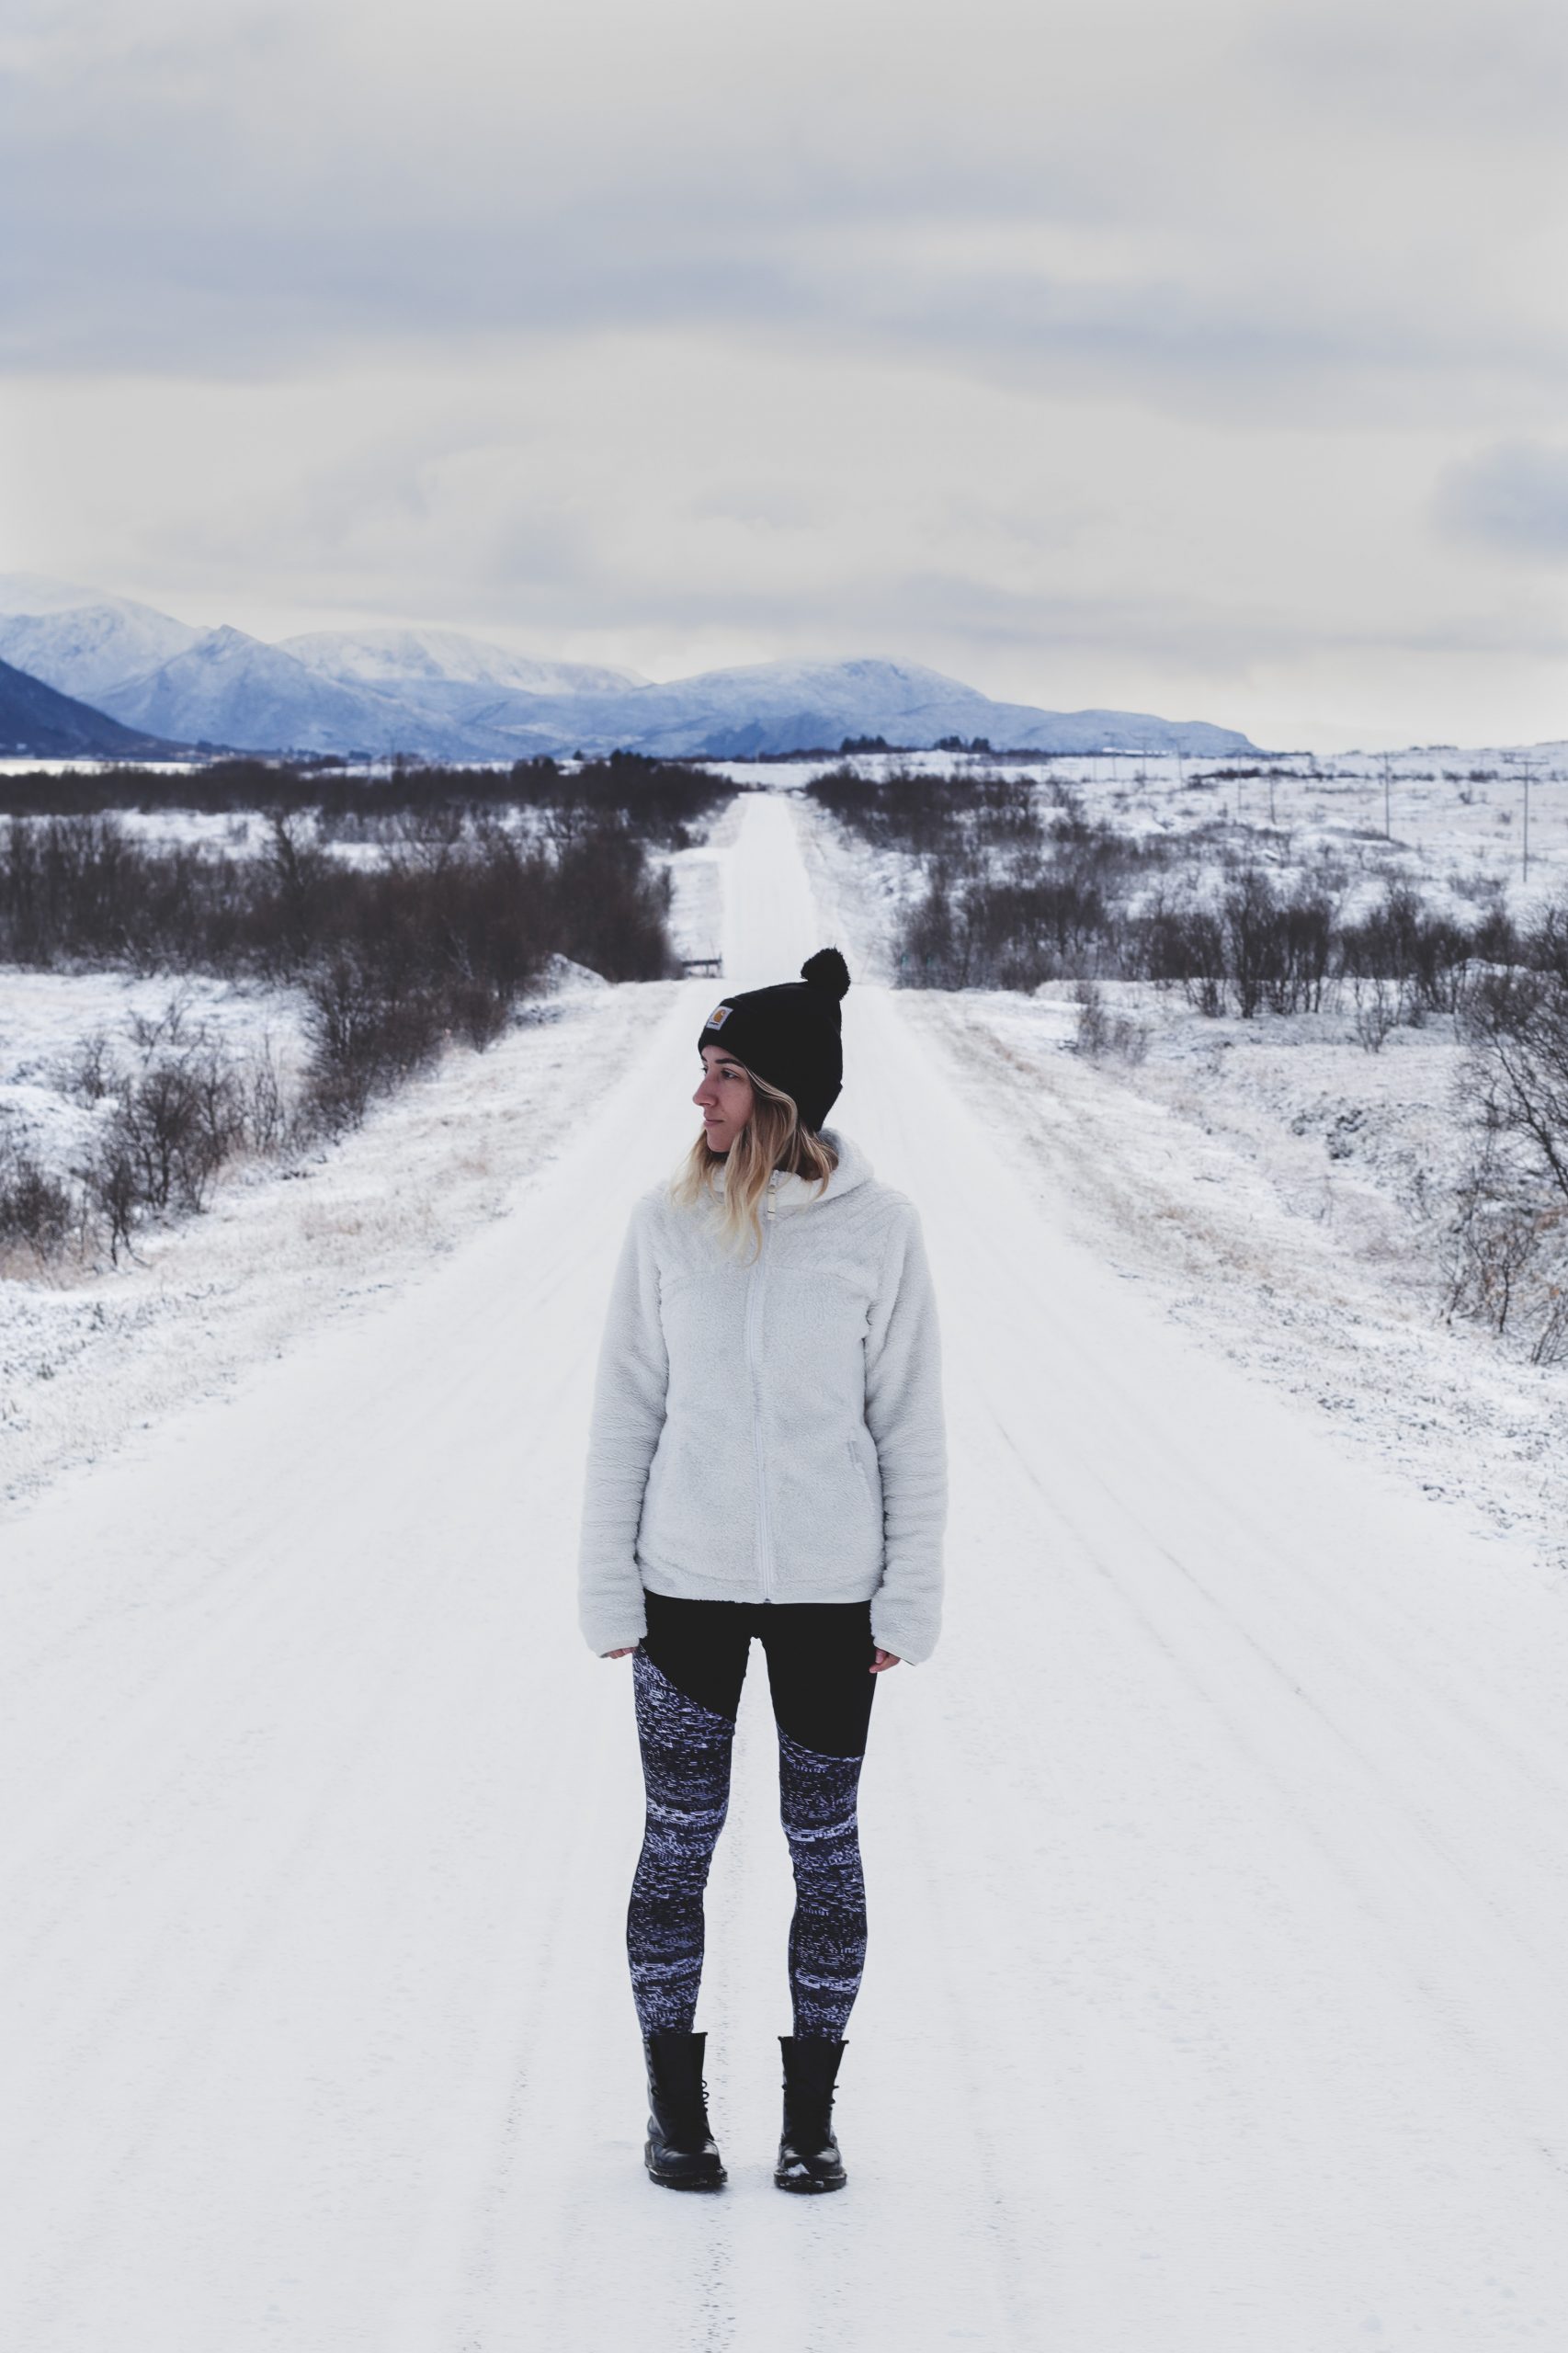 Norvège en hiver: comment s'habiller par grand froid ? - Samfaitvoyager